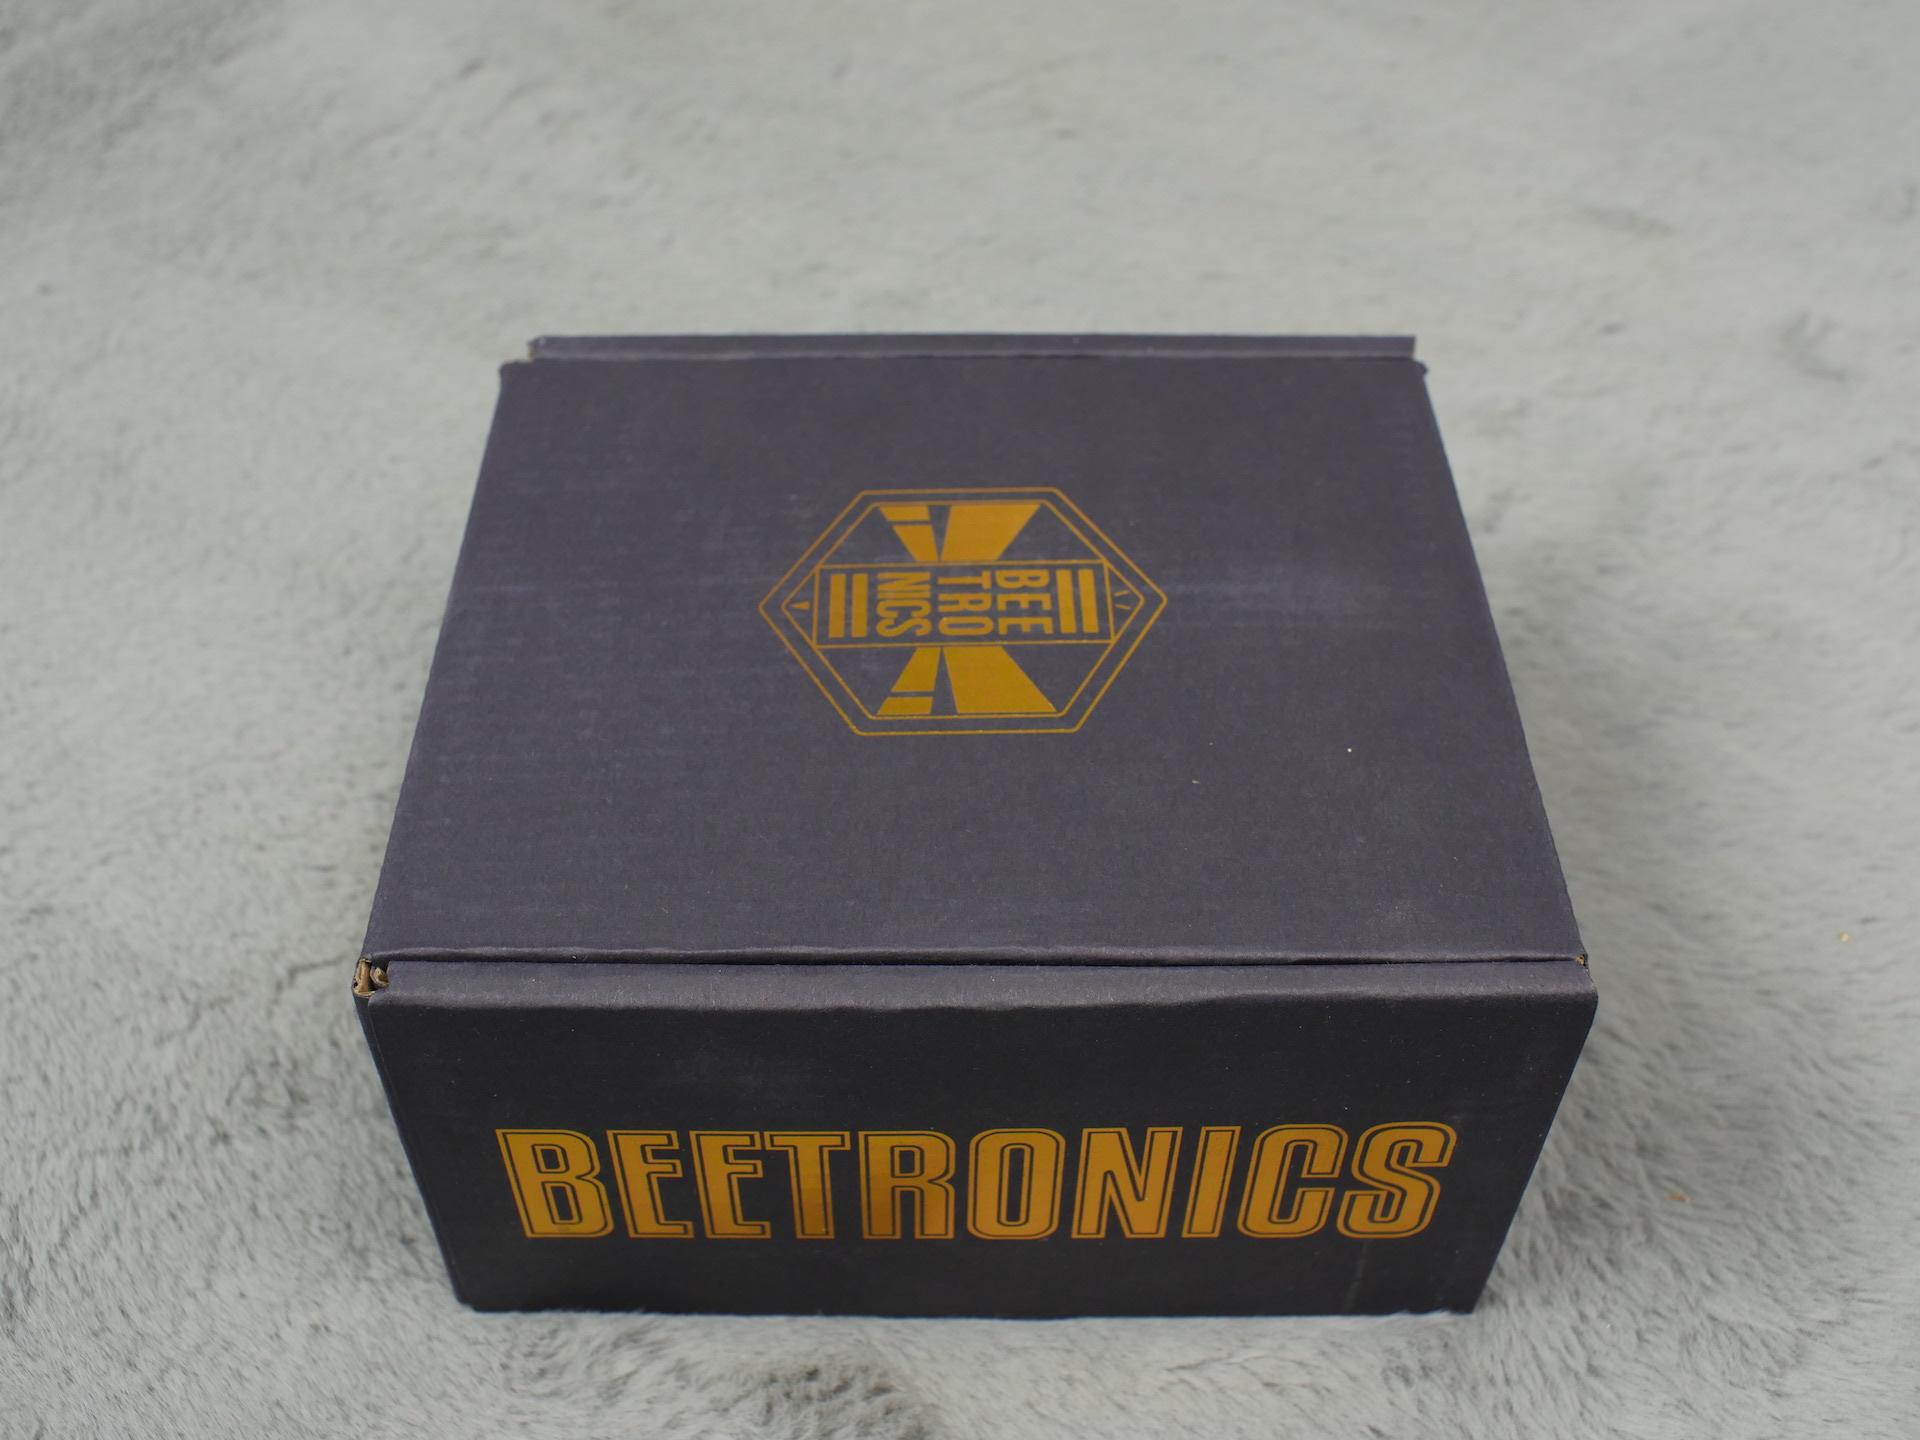 Beetronics Overhive